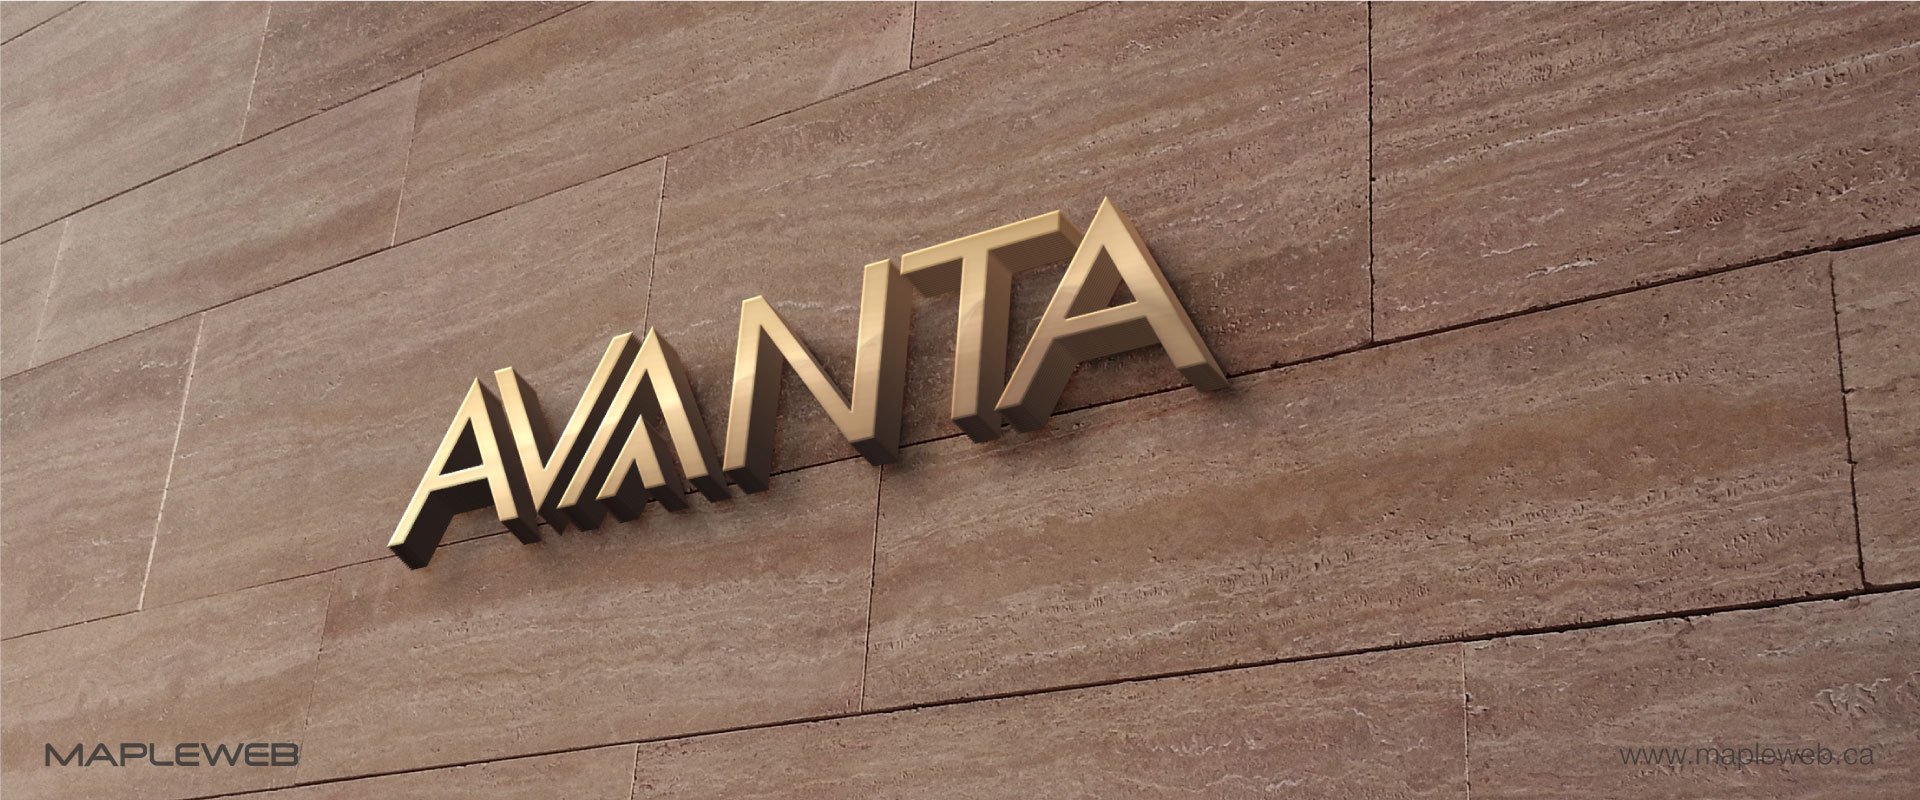 avanta-brand-logo-design-by-mapleweb-vancouver-canada-3d-wall-mock